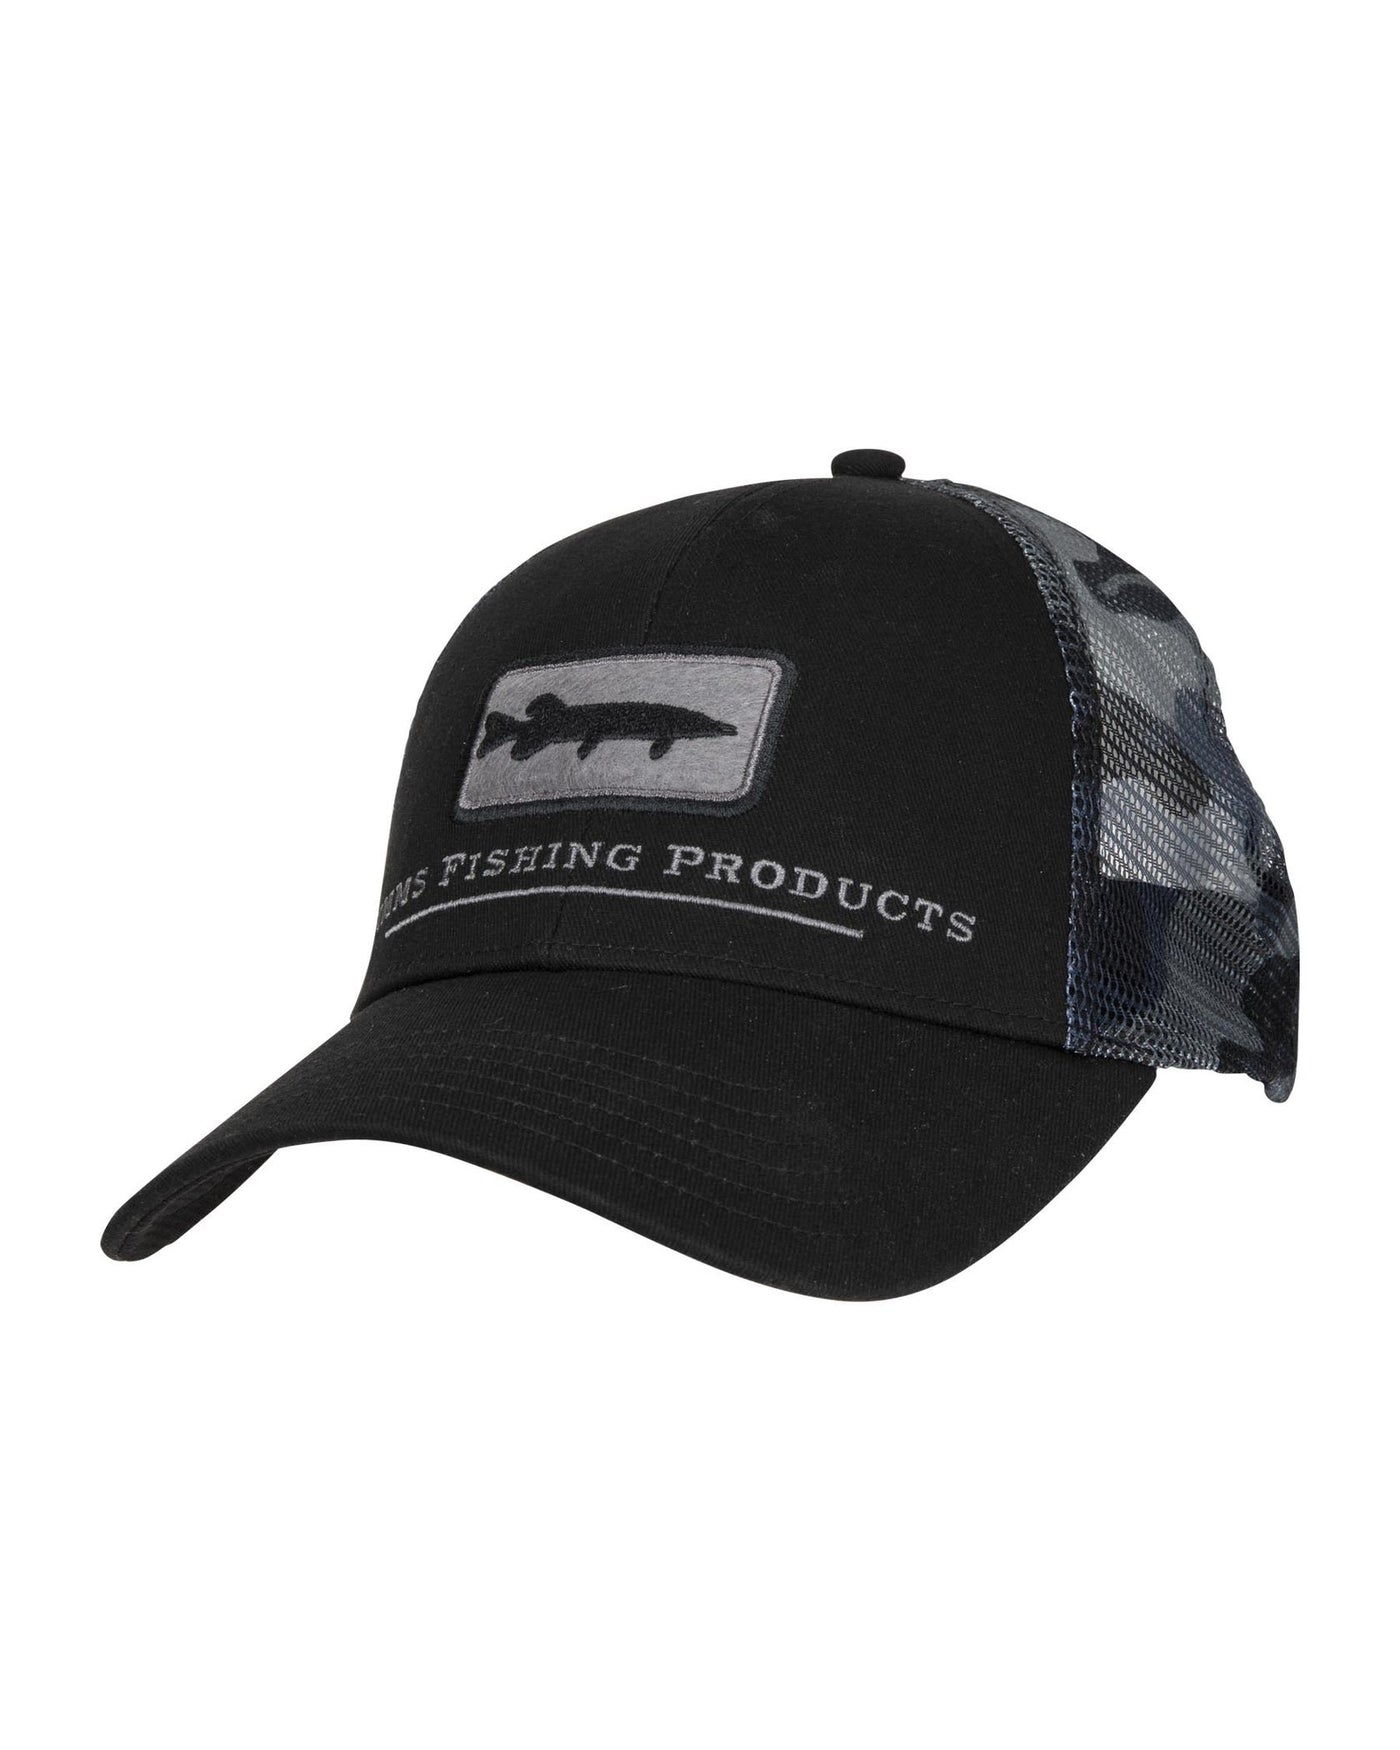 Simms Fishing Musky Icon Trucker Hat – Musky Fool